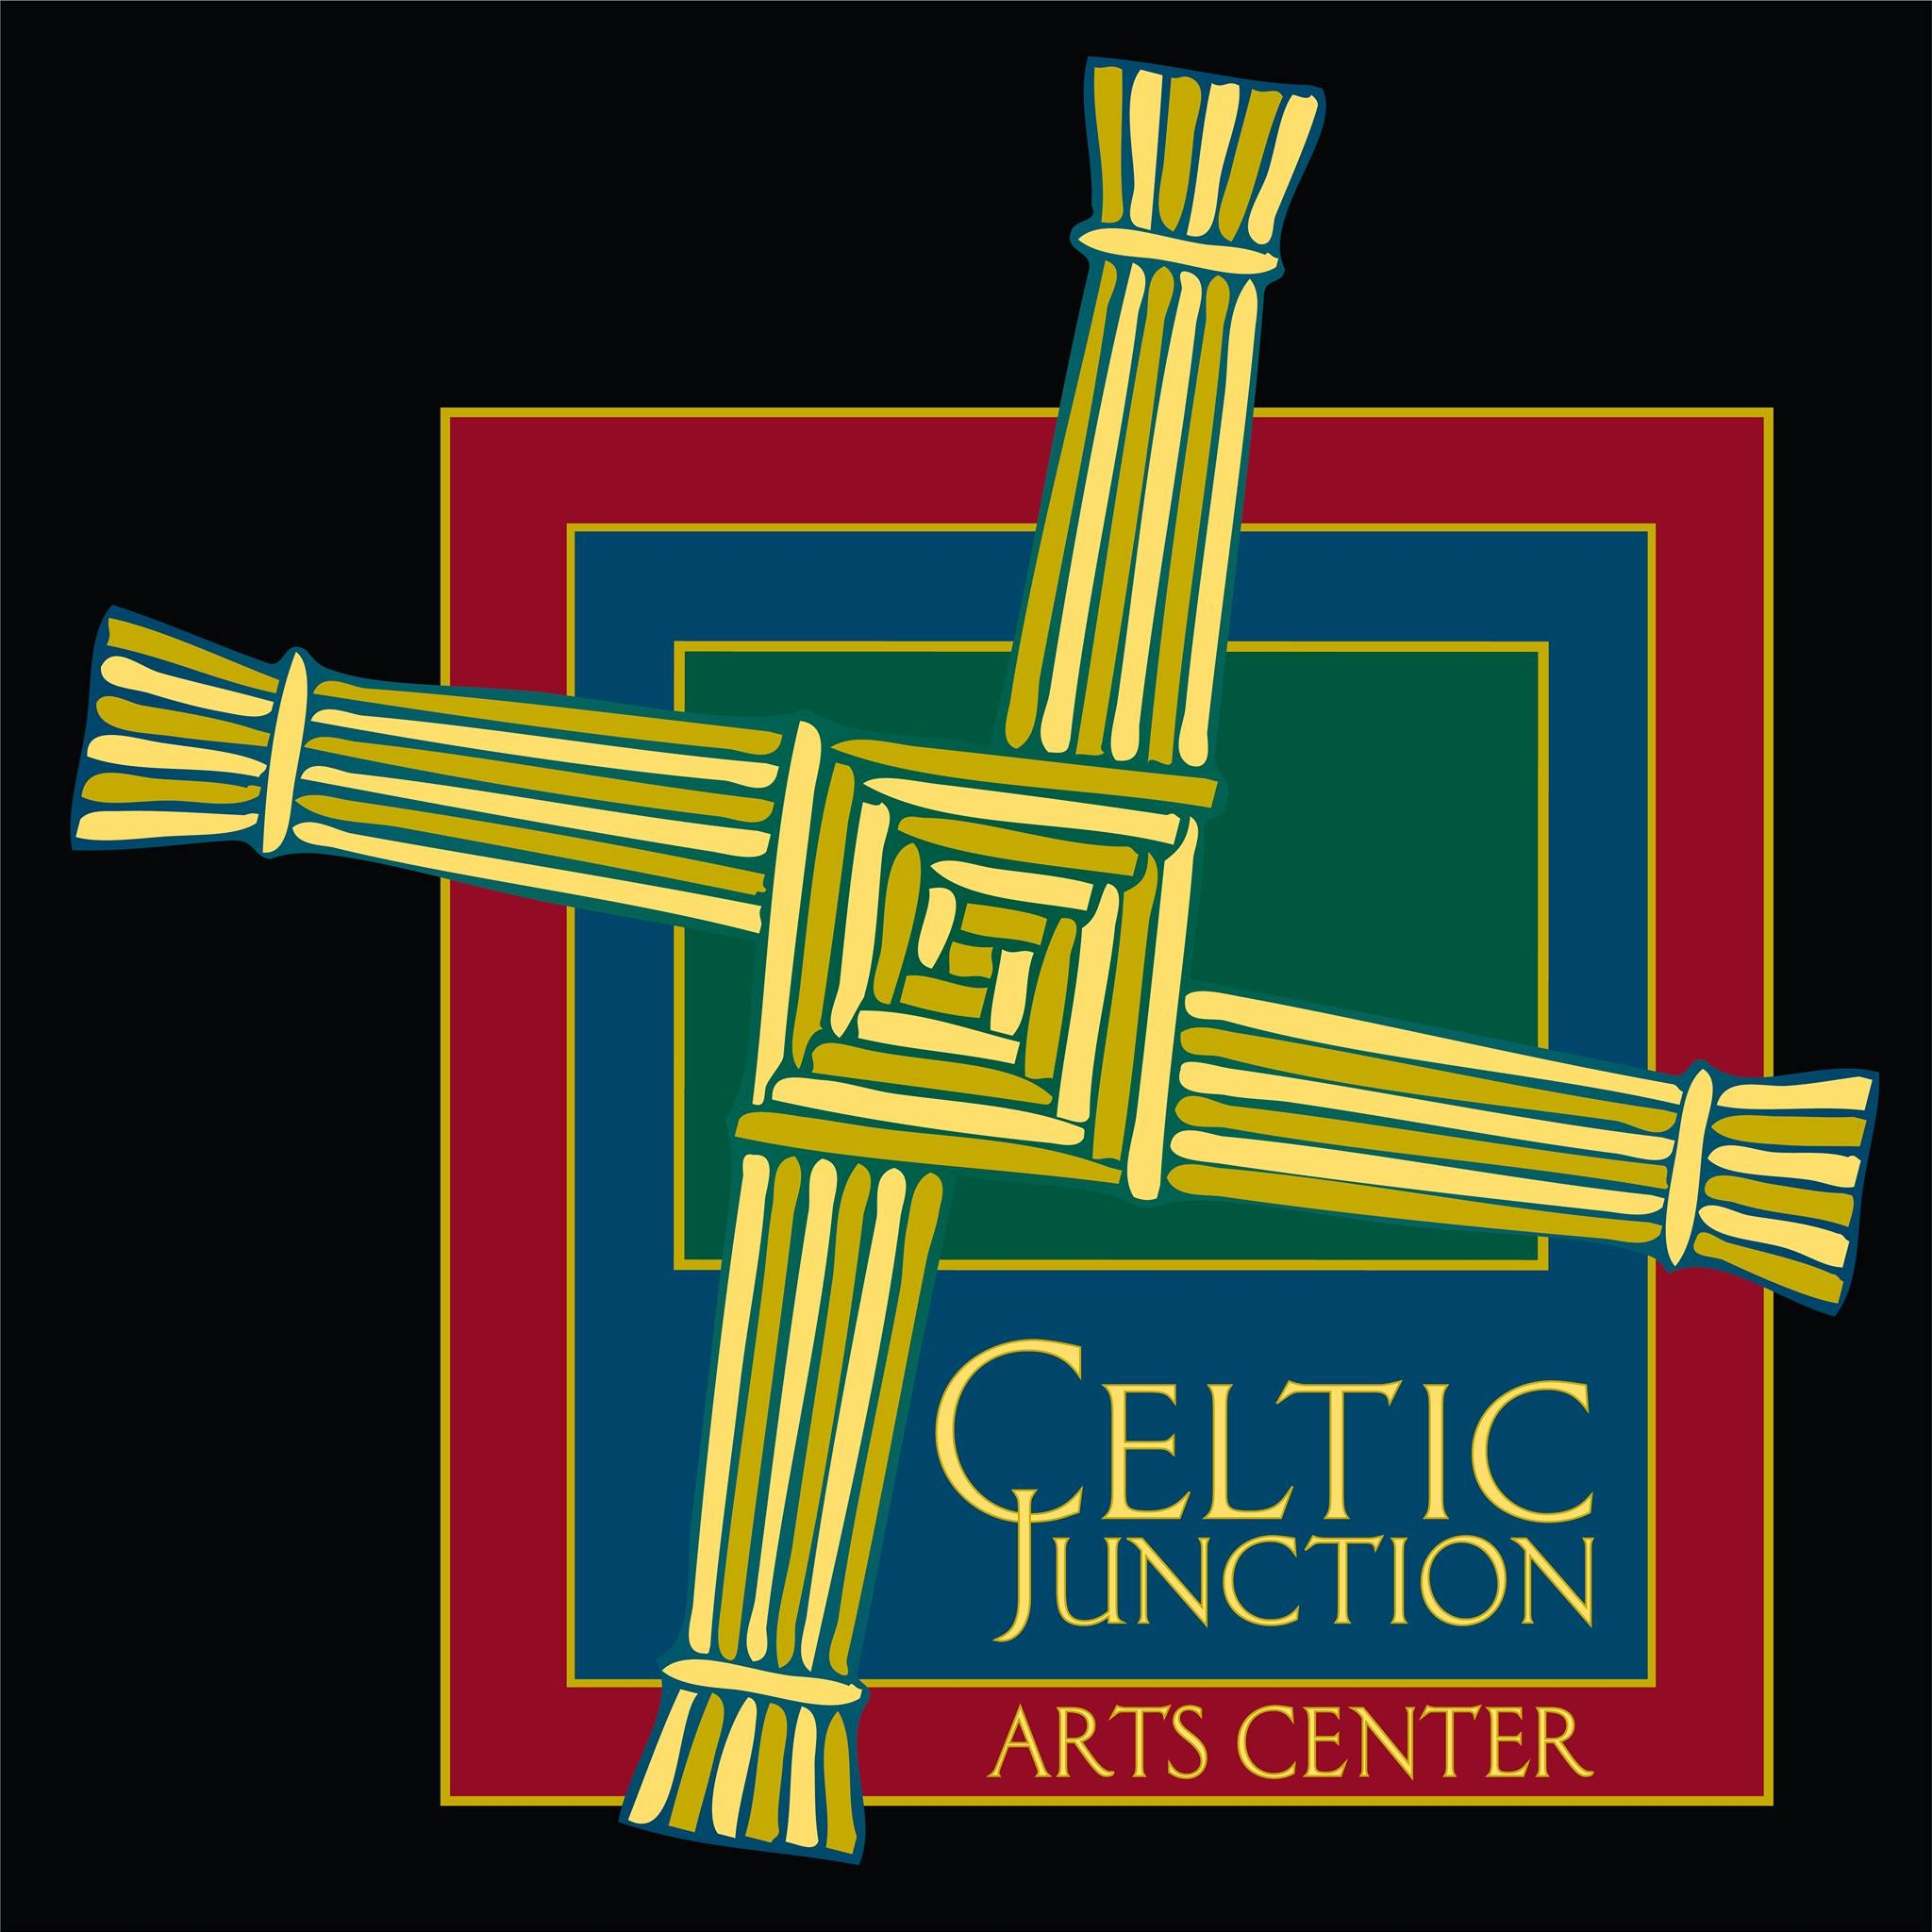 Celtic Junction Arts Center